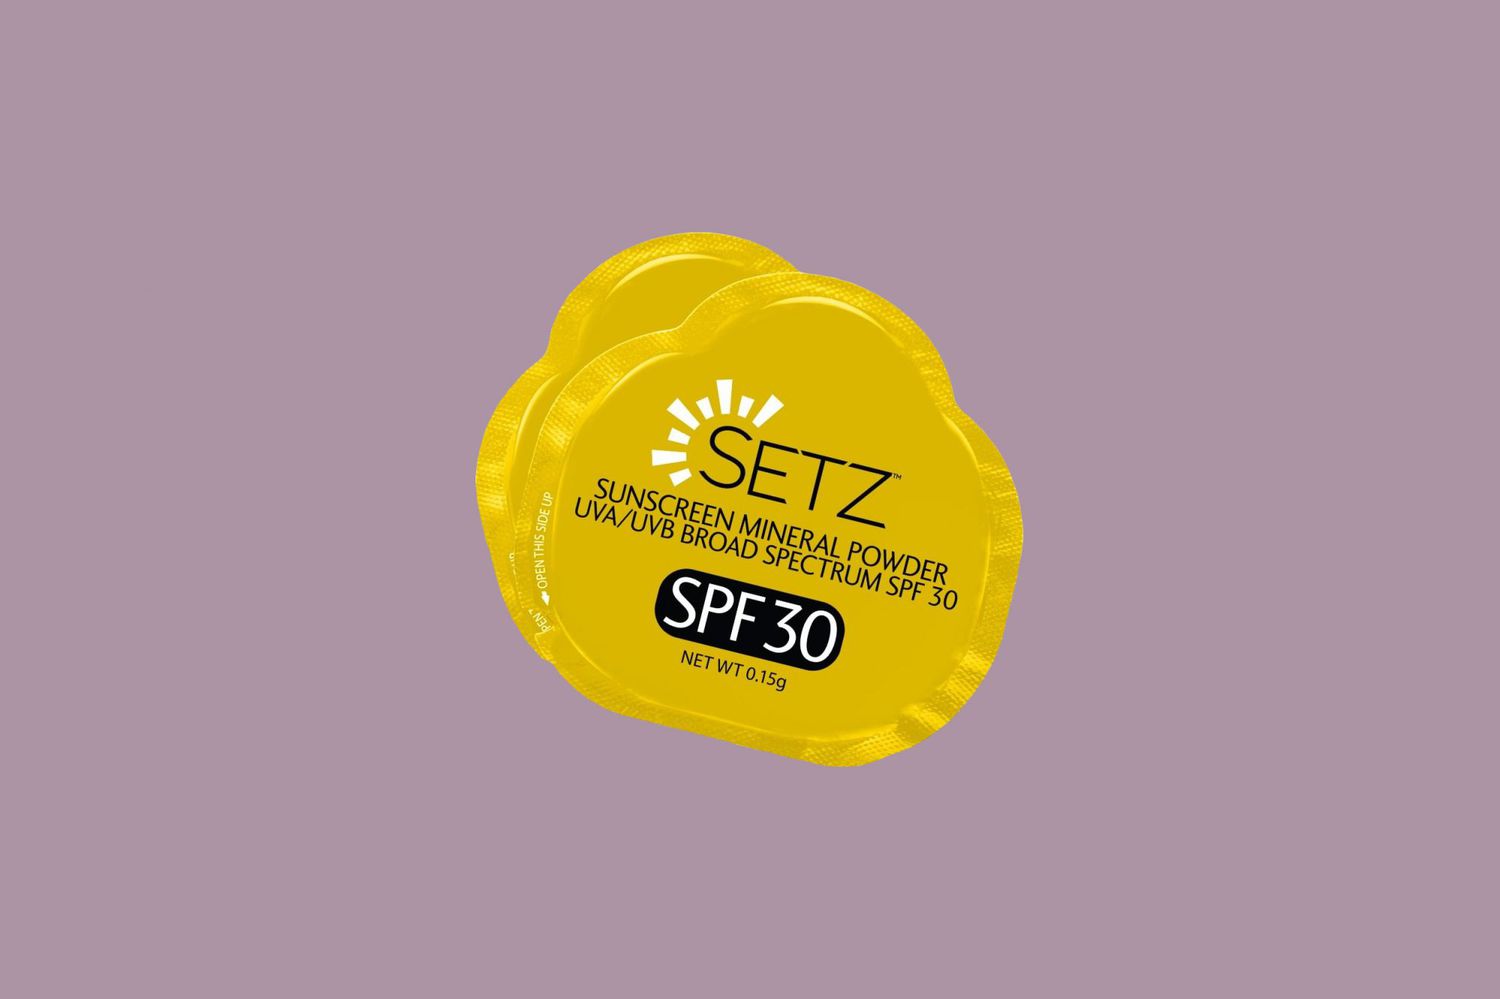 SETZ Sunscreen Mineral Powder SPF 30